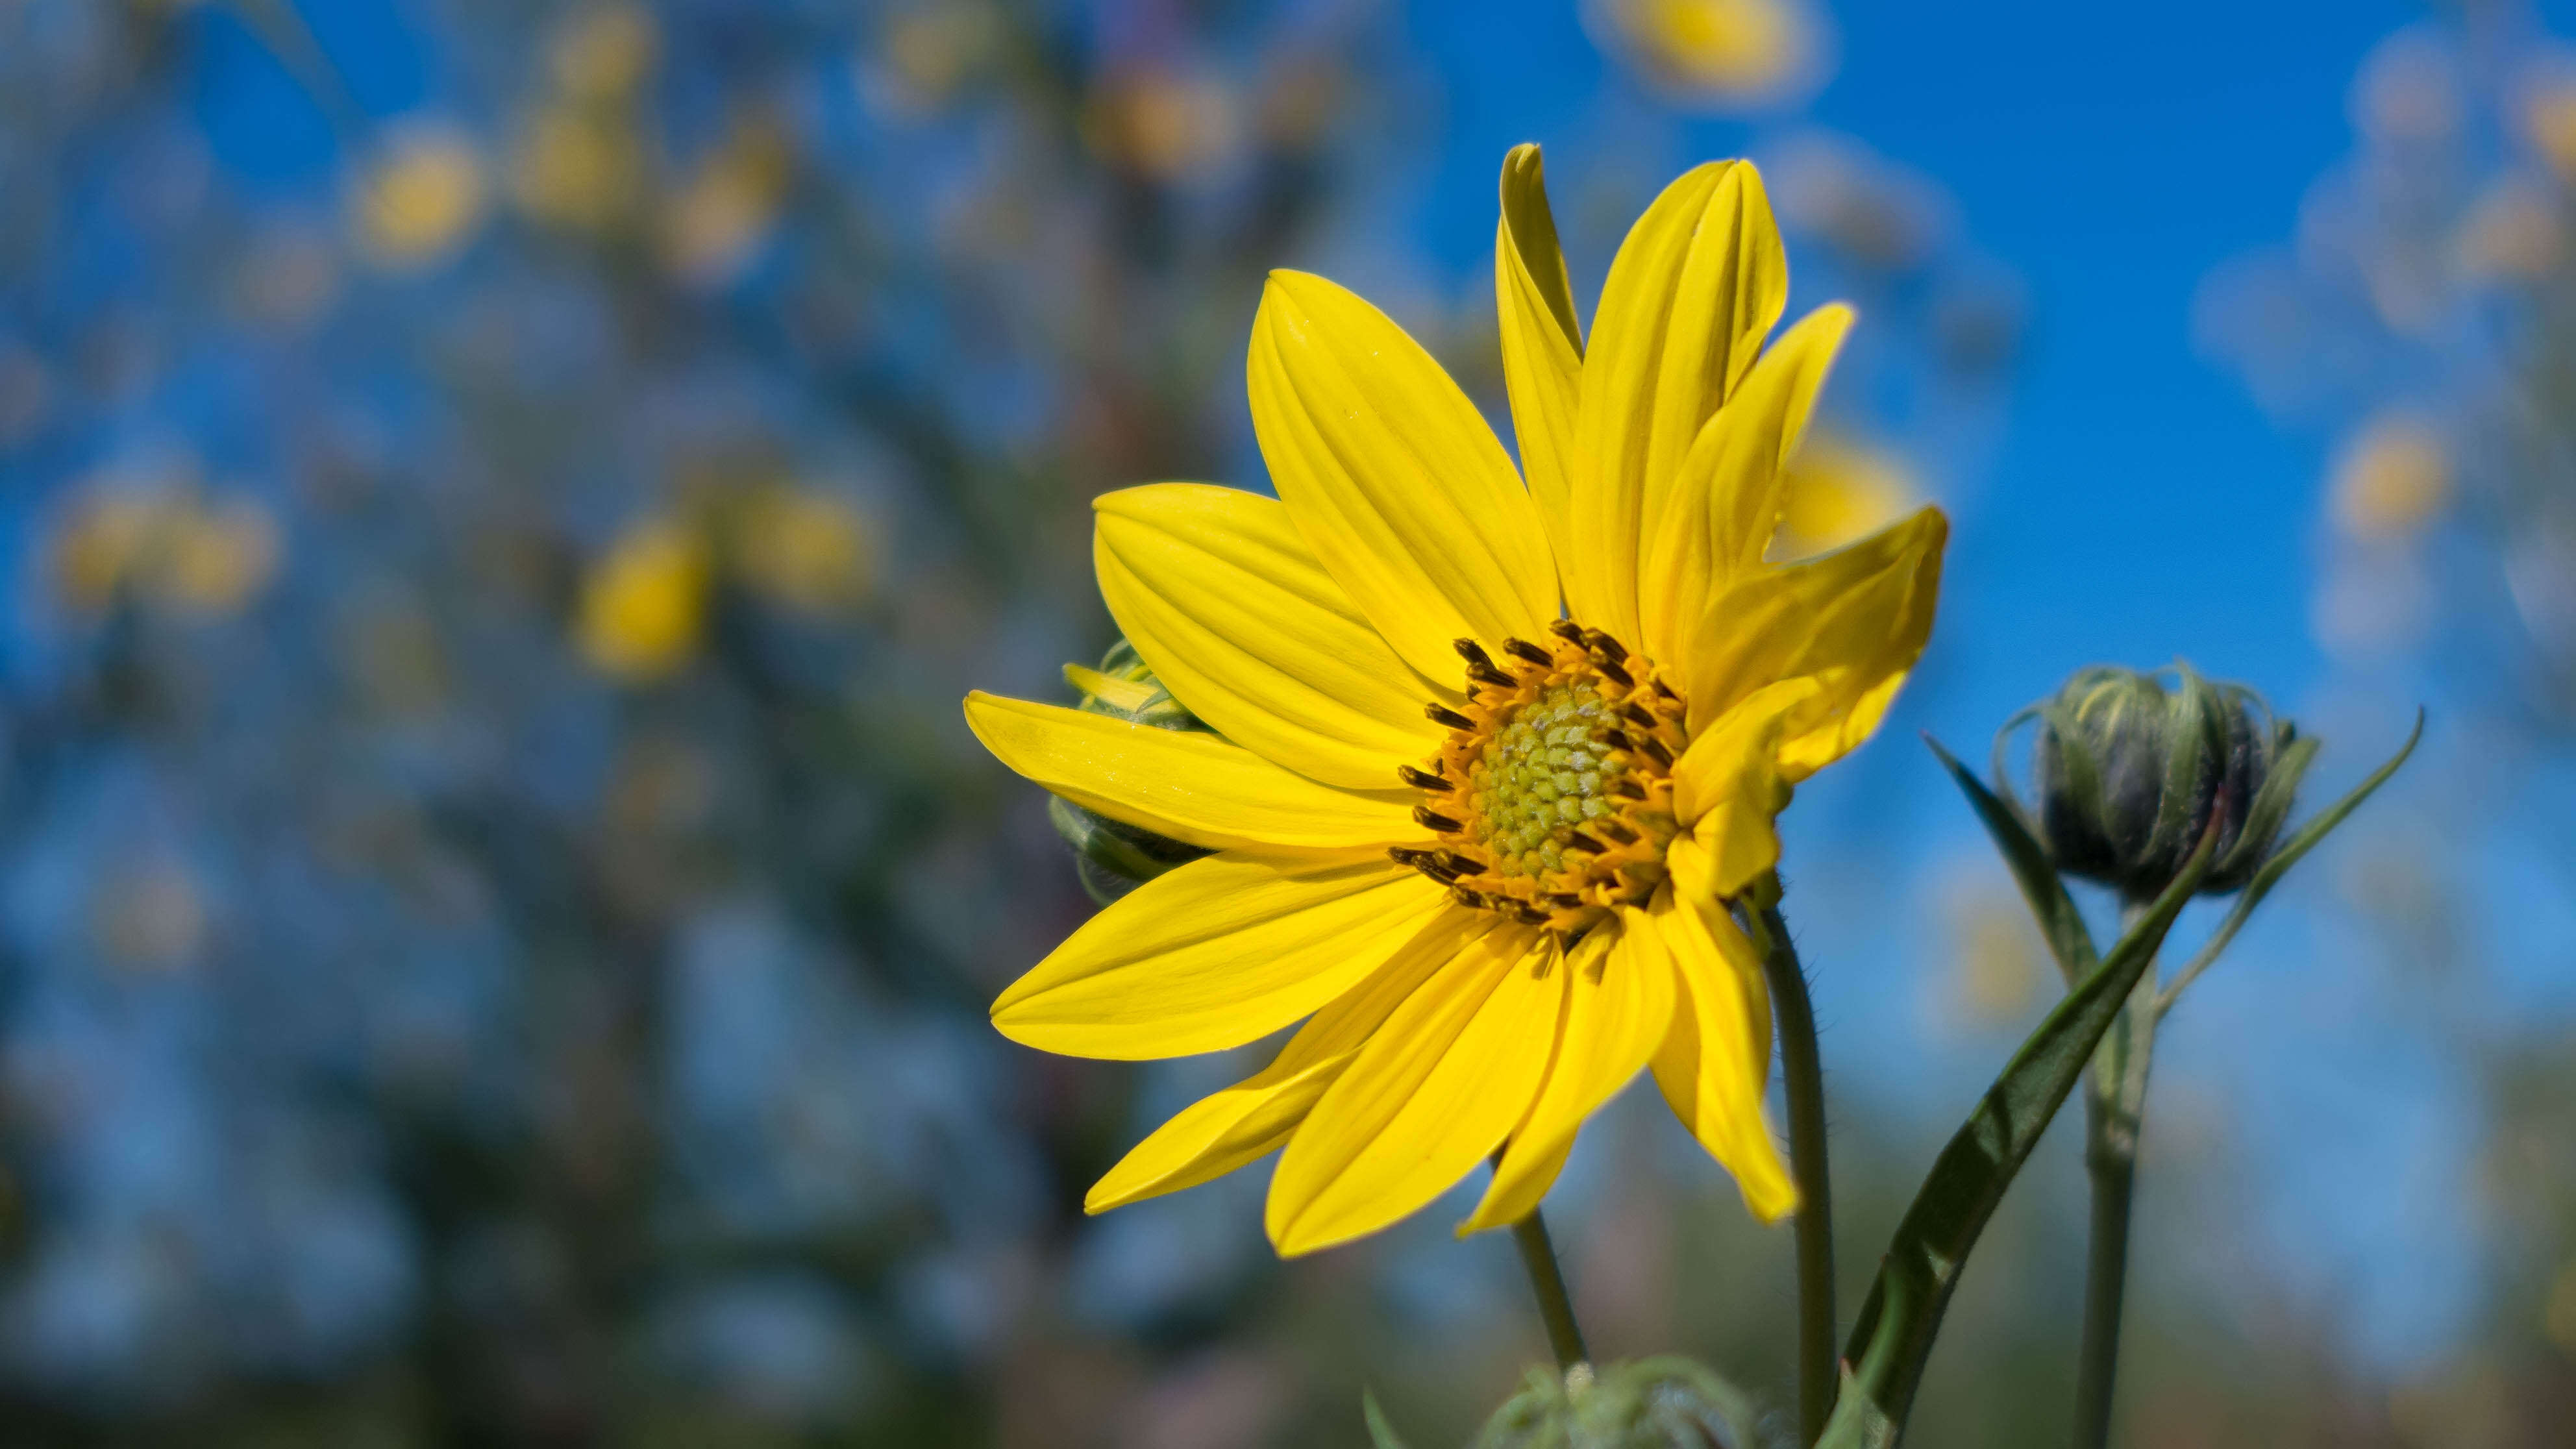 Image of giant sunflower